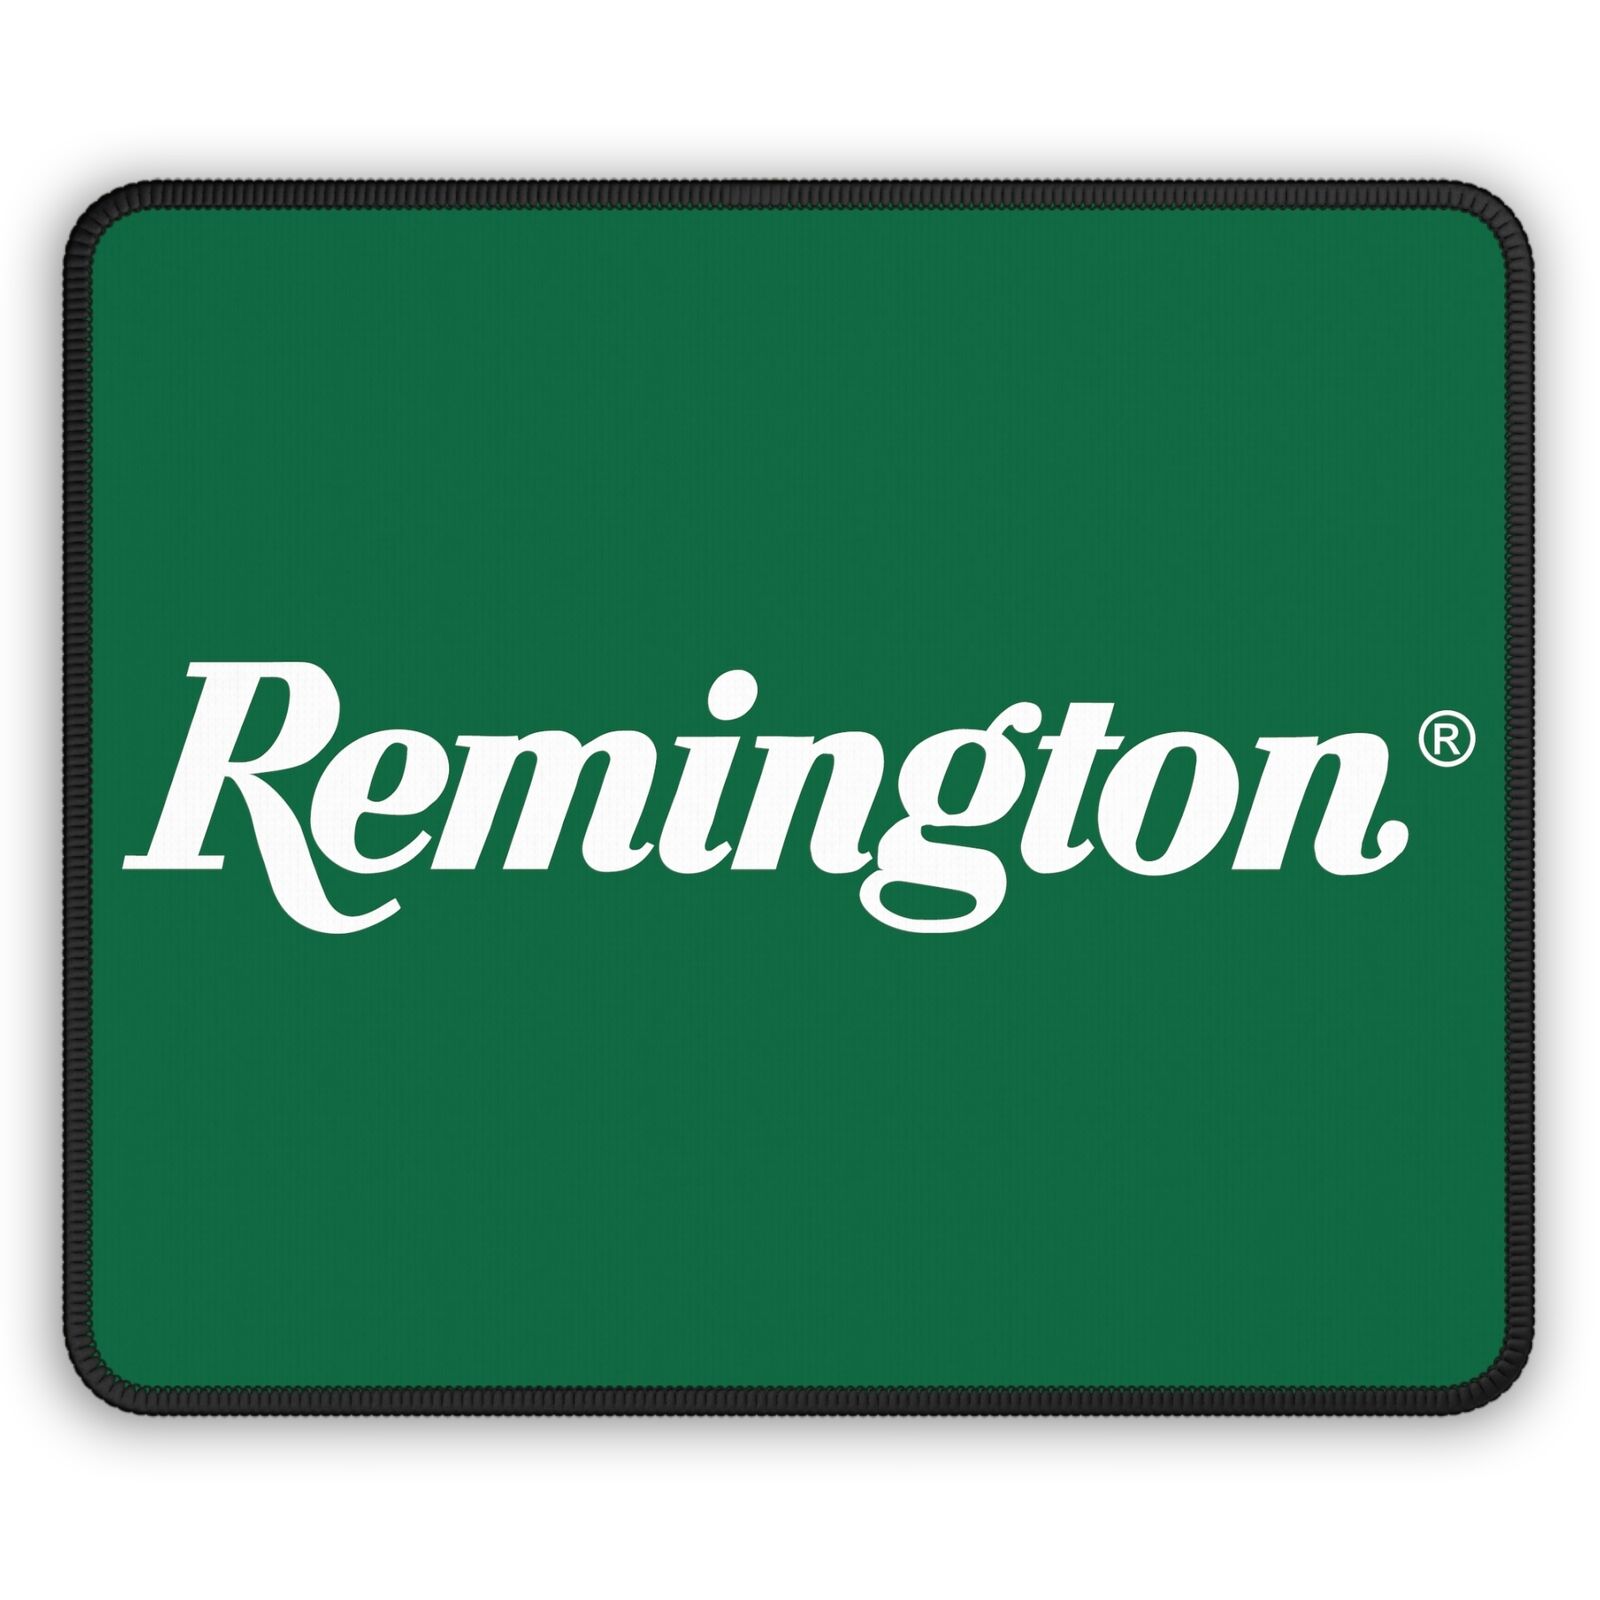 Remington Firearms - Green White - Custom Design - High Quality Mouse Pad 9x7